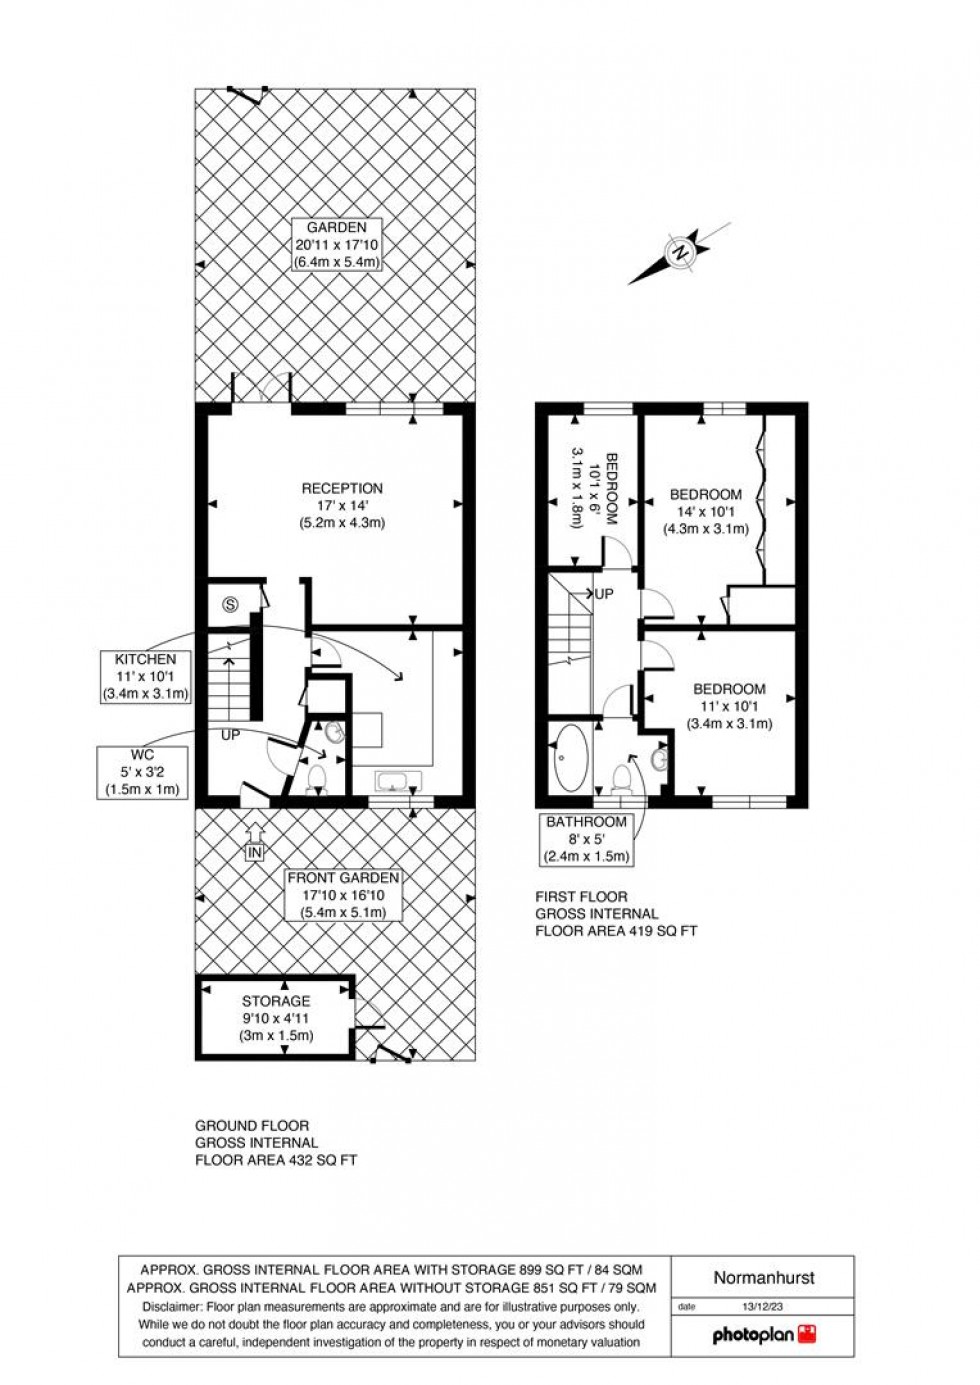 Floorplan for Normanhurst, Ashford